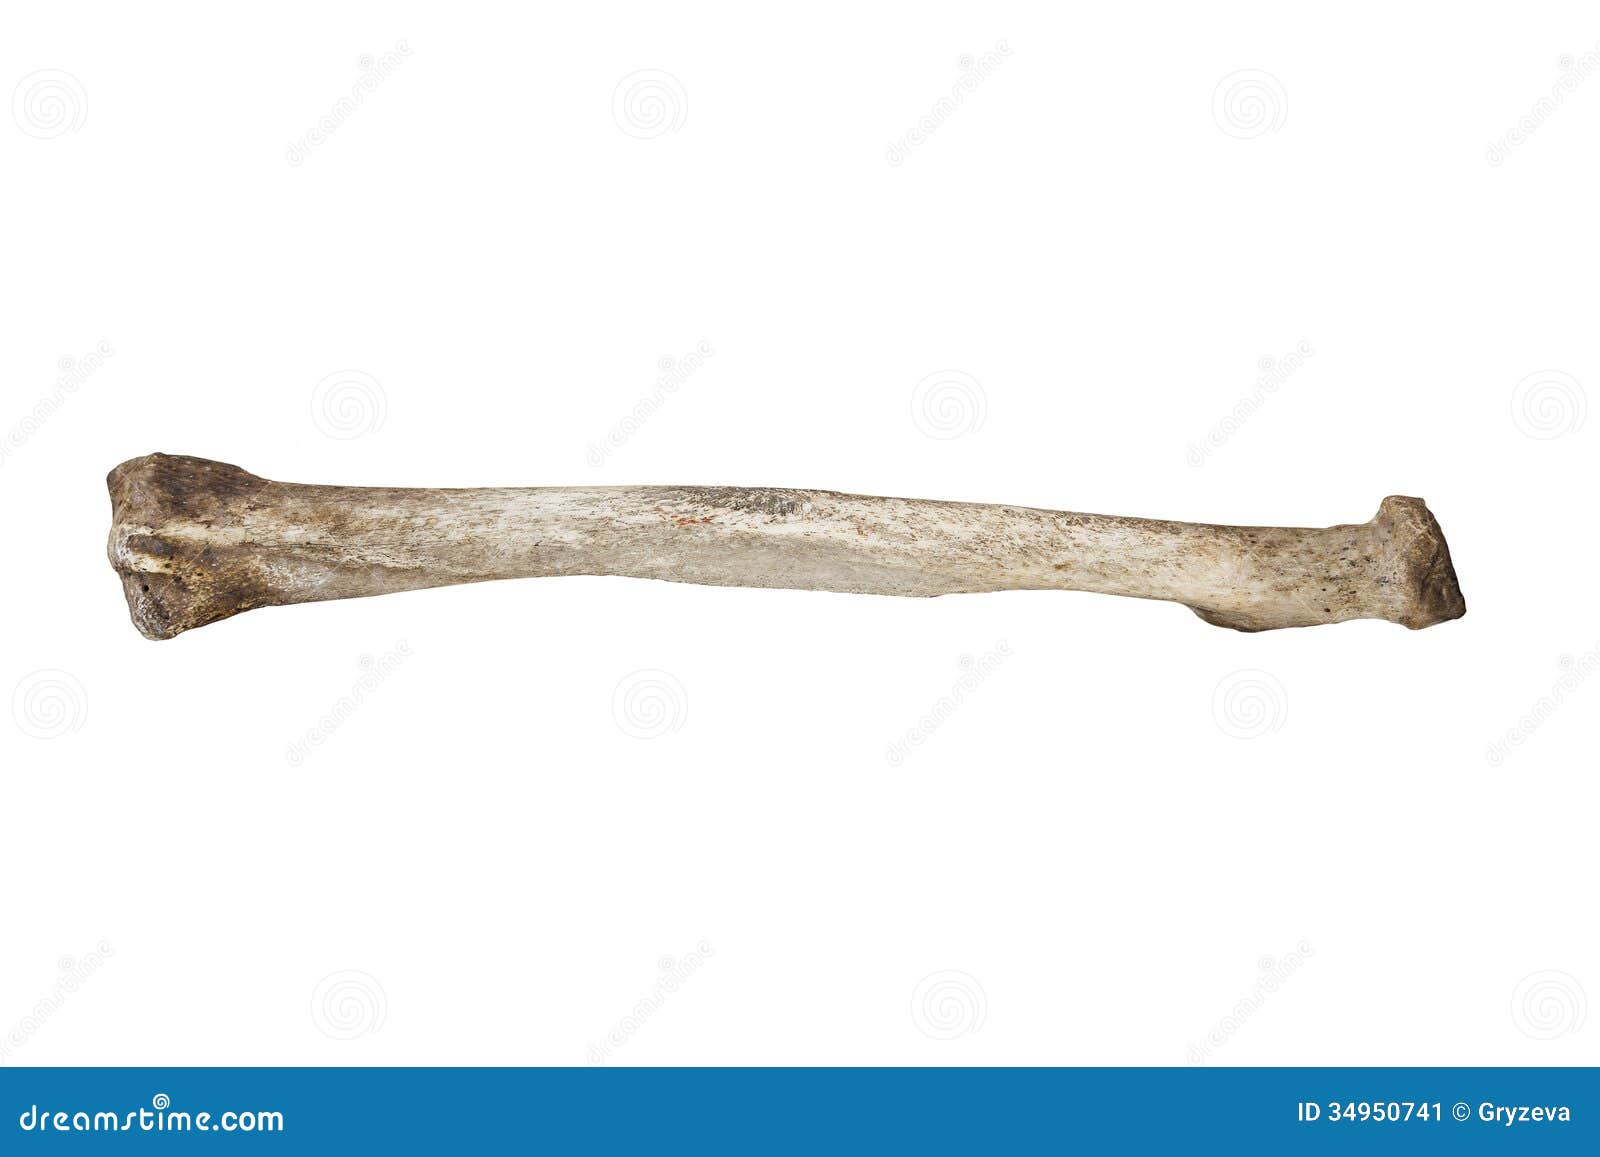 Old bone. Кость на белом фоне. Текстура древней кости.